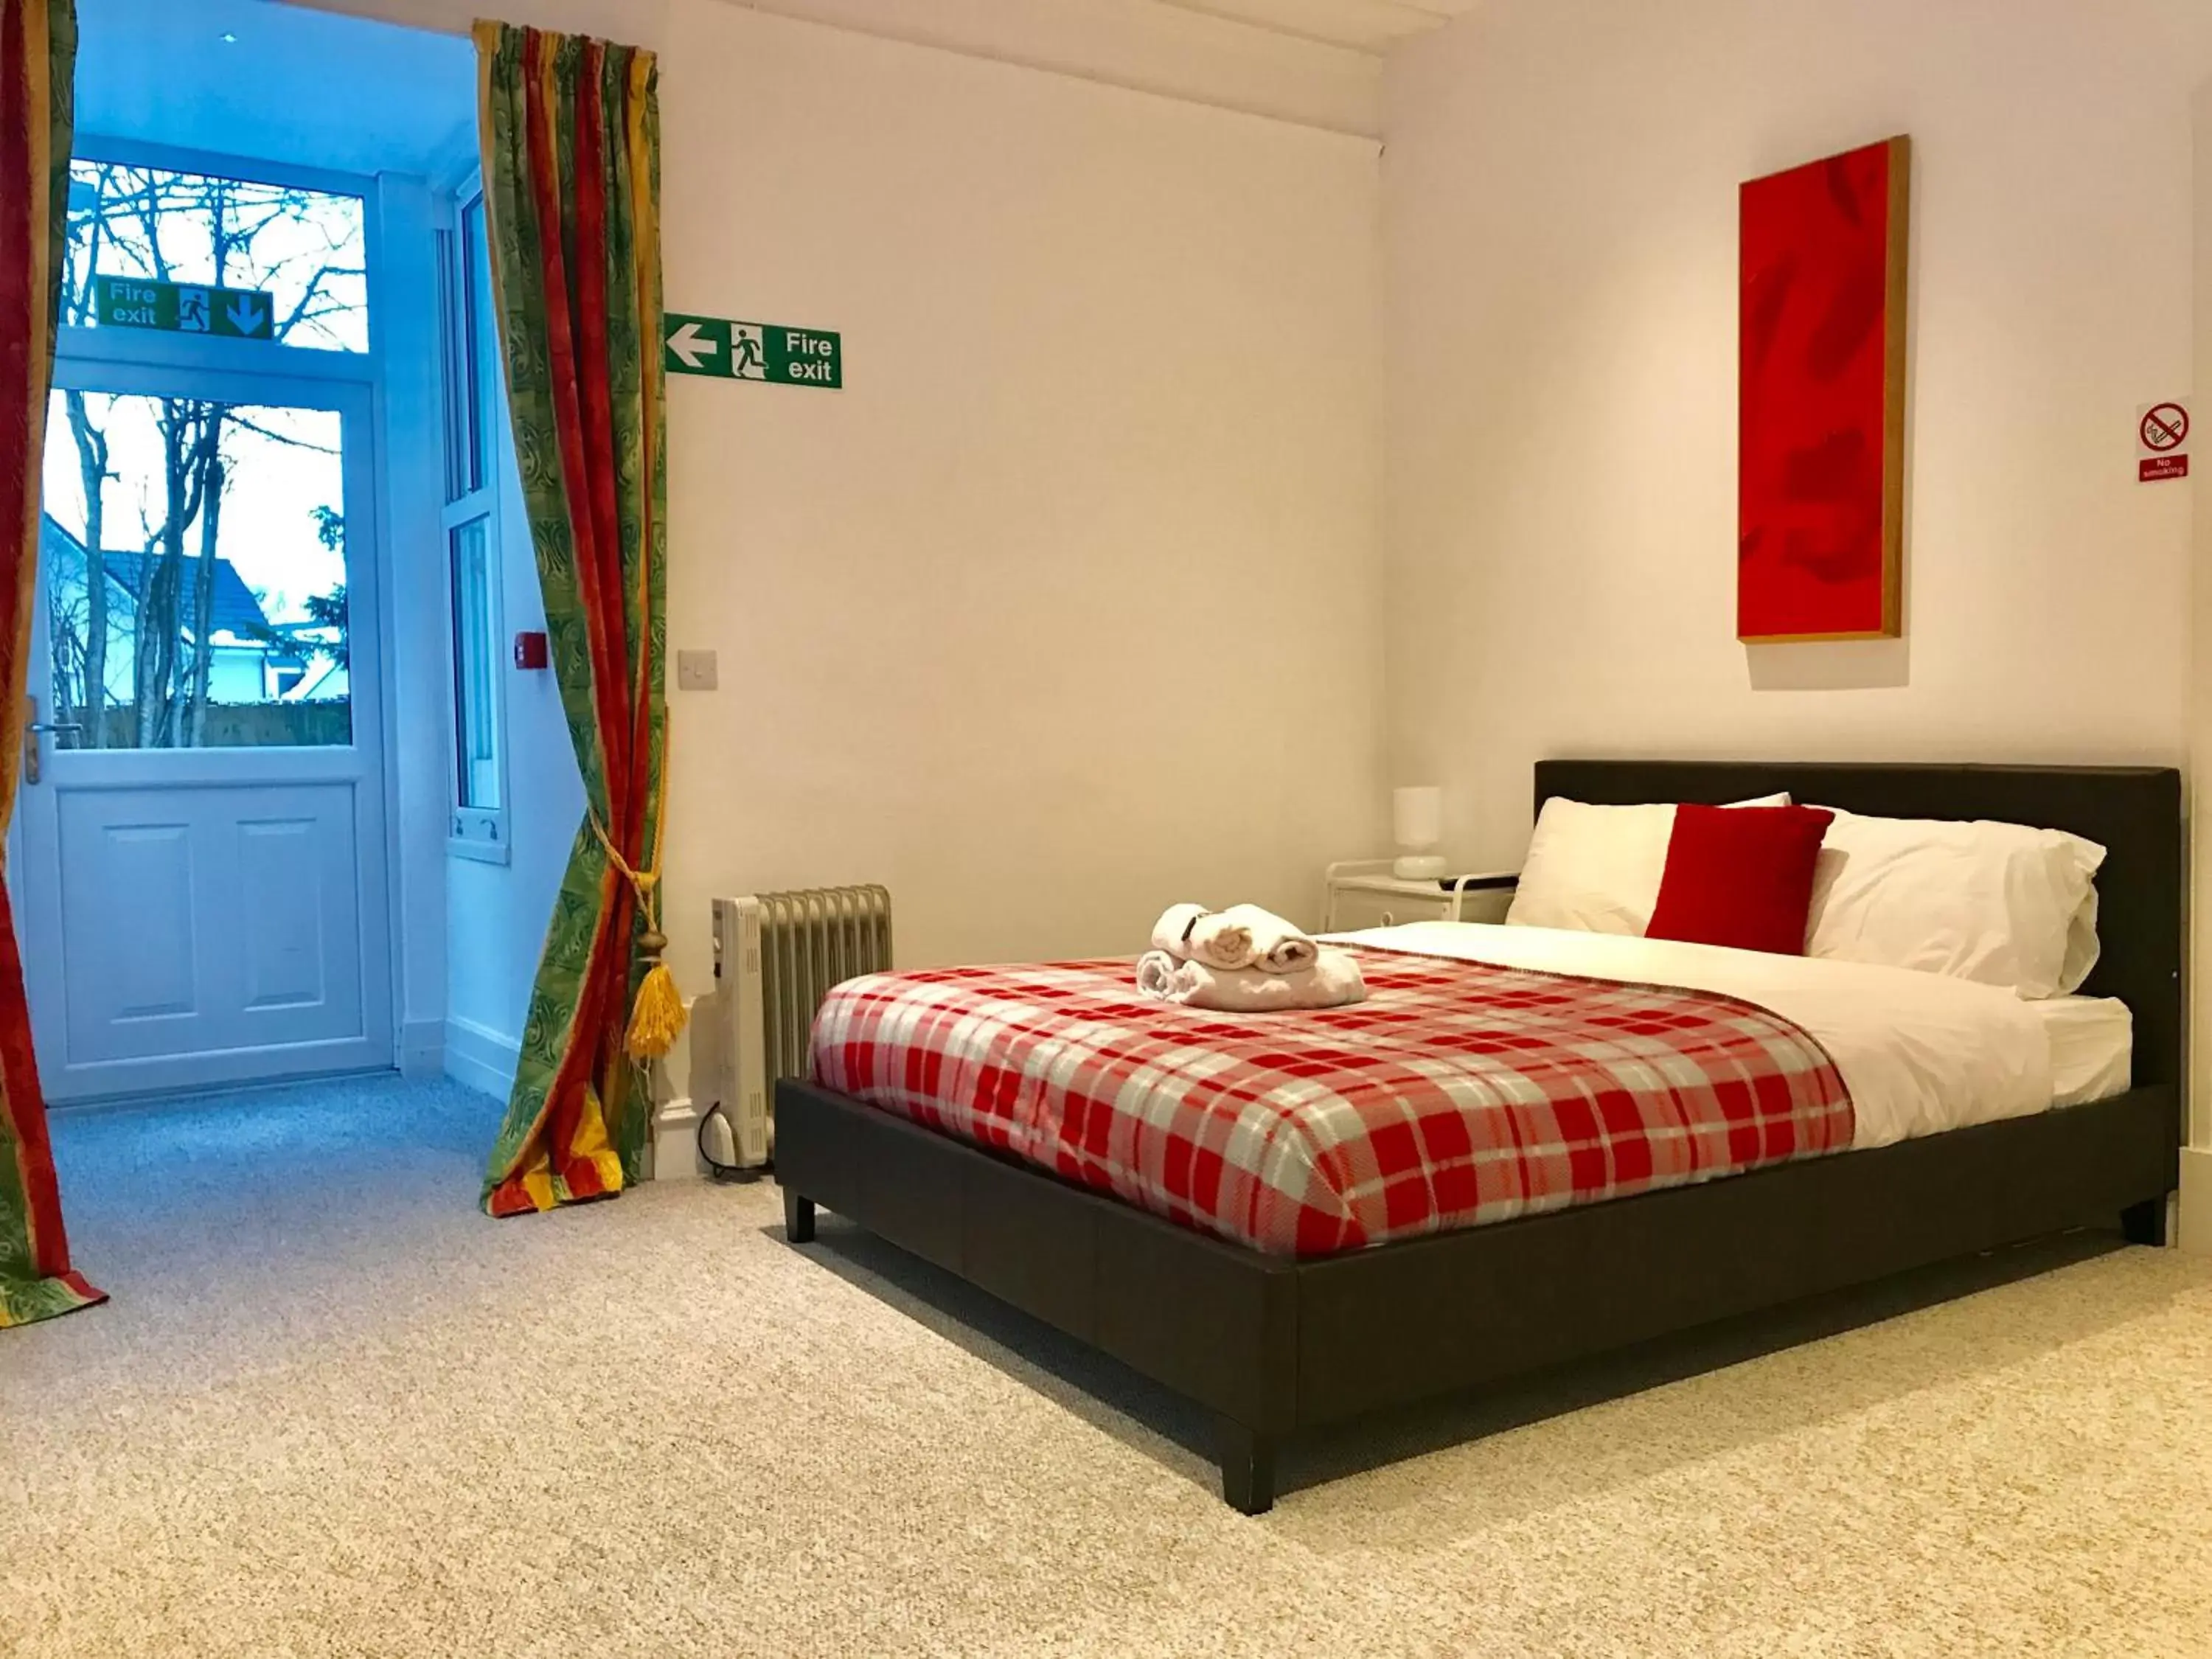 Bedroom in Drumdevan Country House, Inverness